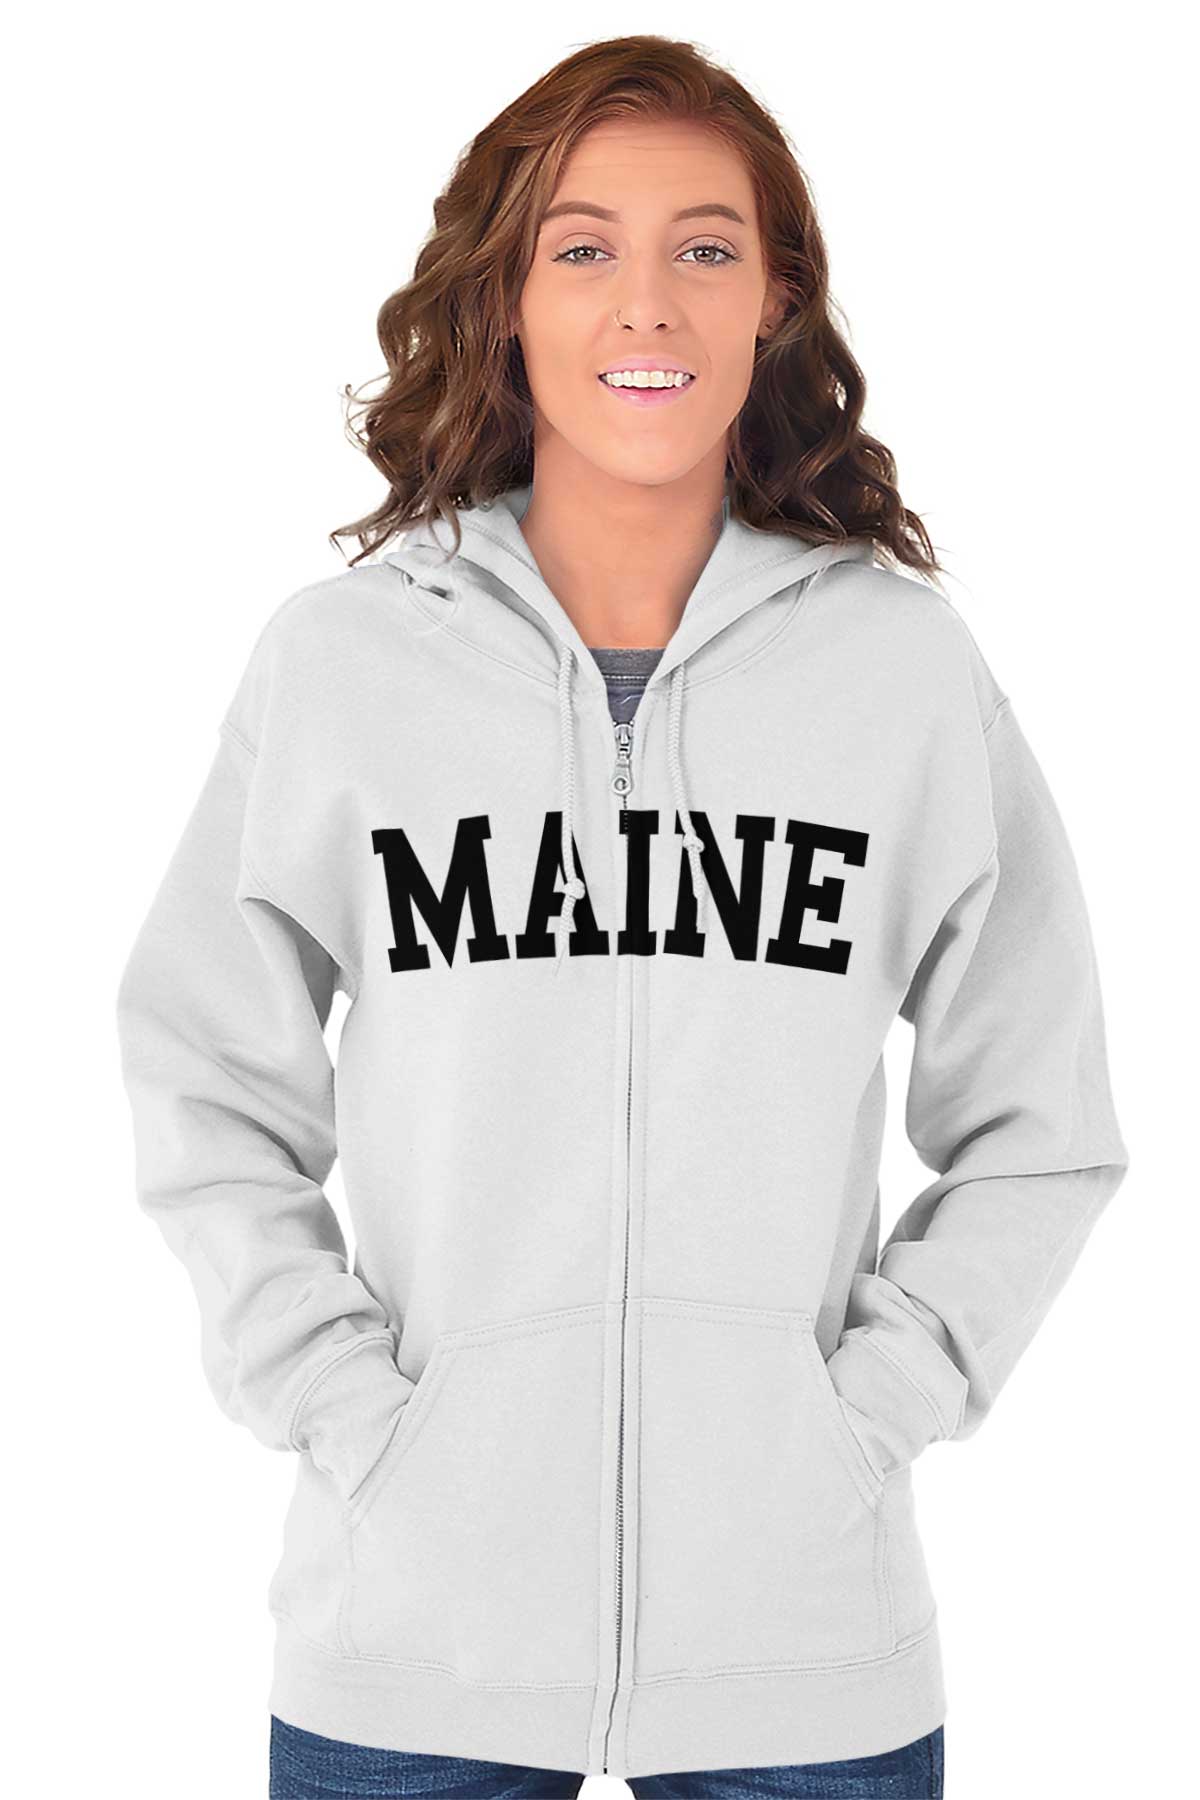 Maine Athletic Student Gym Vacation Pride Zipper Sweat Shirt Zip ...